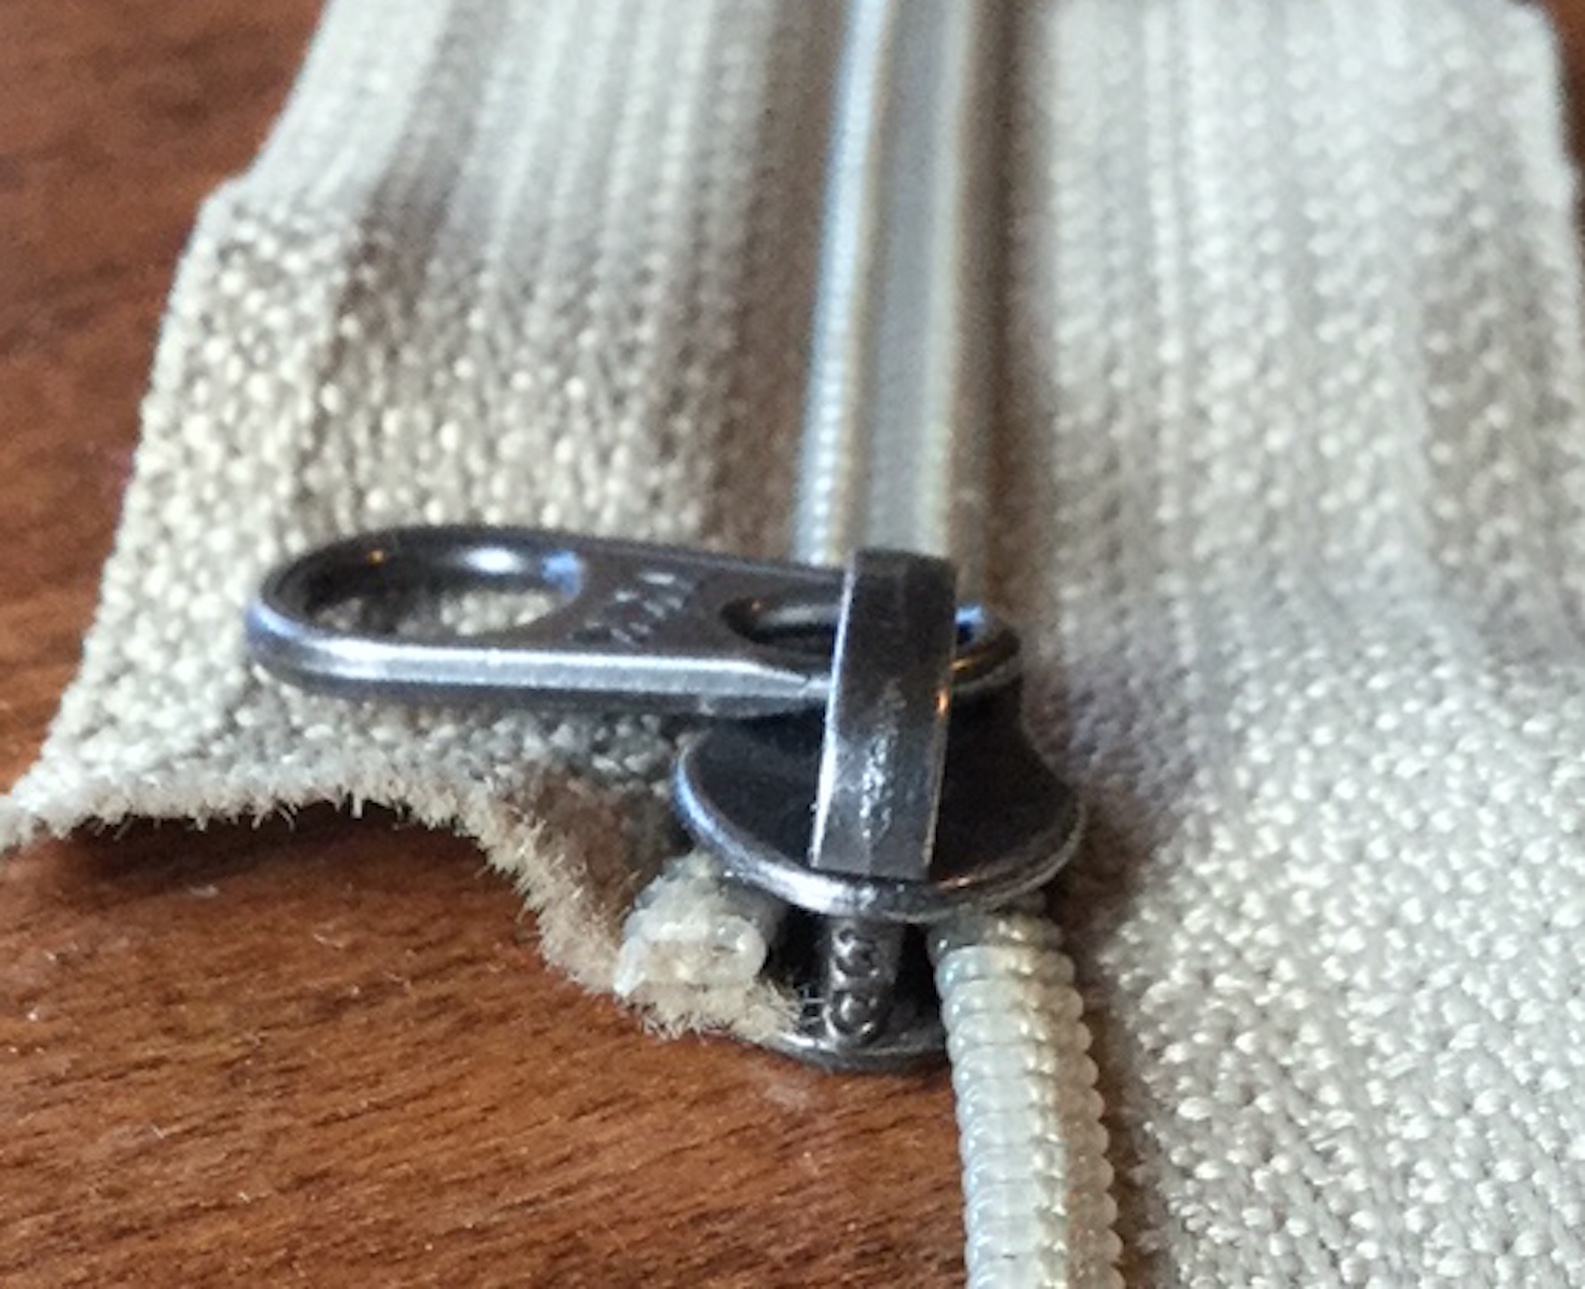 How to Unzip a Double Zipper